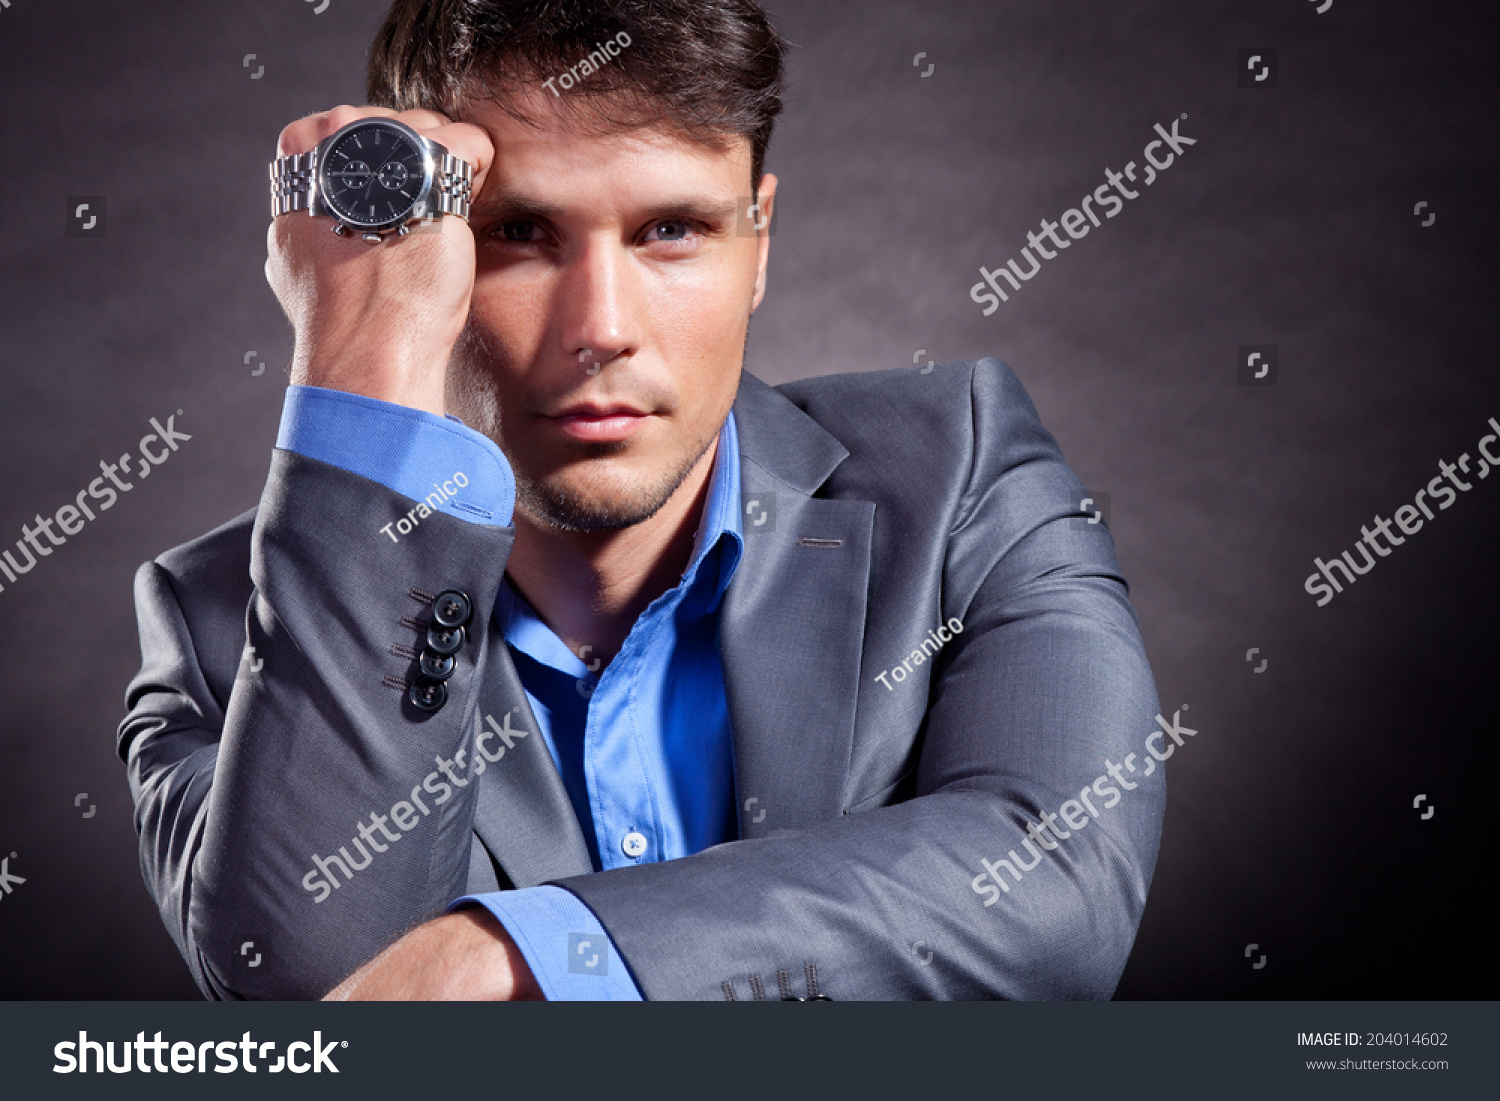 Муж час дону. Мужчина с часами. Мужчина с часами на руке. Бизнесмен с часами. Наручные часы на человеке.